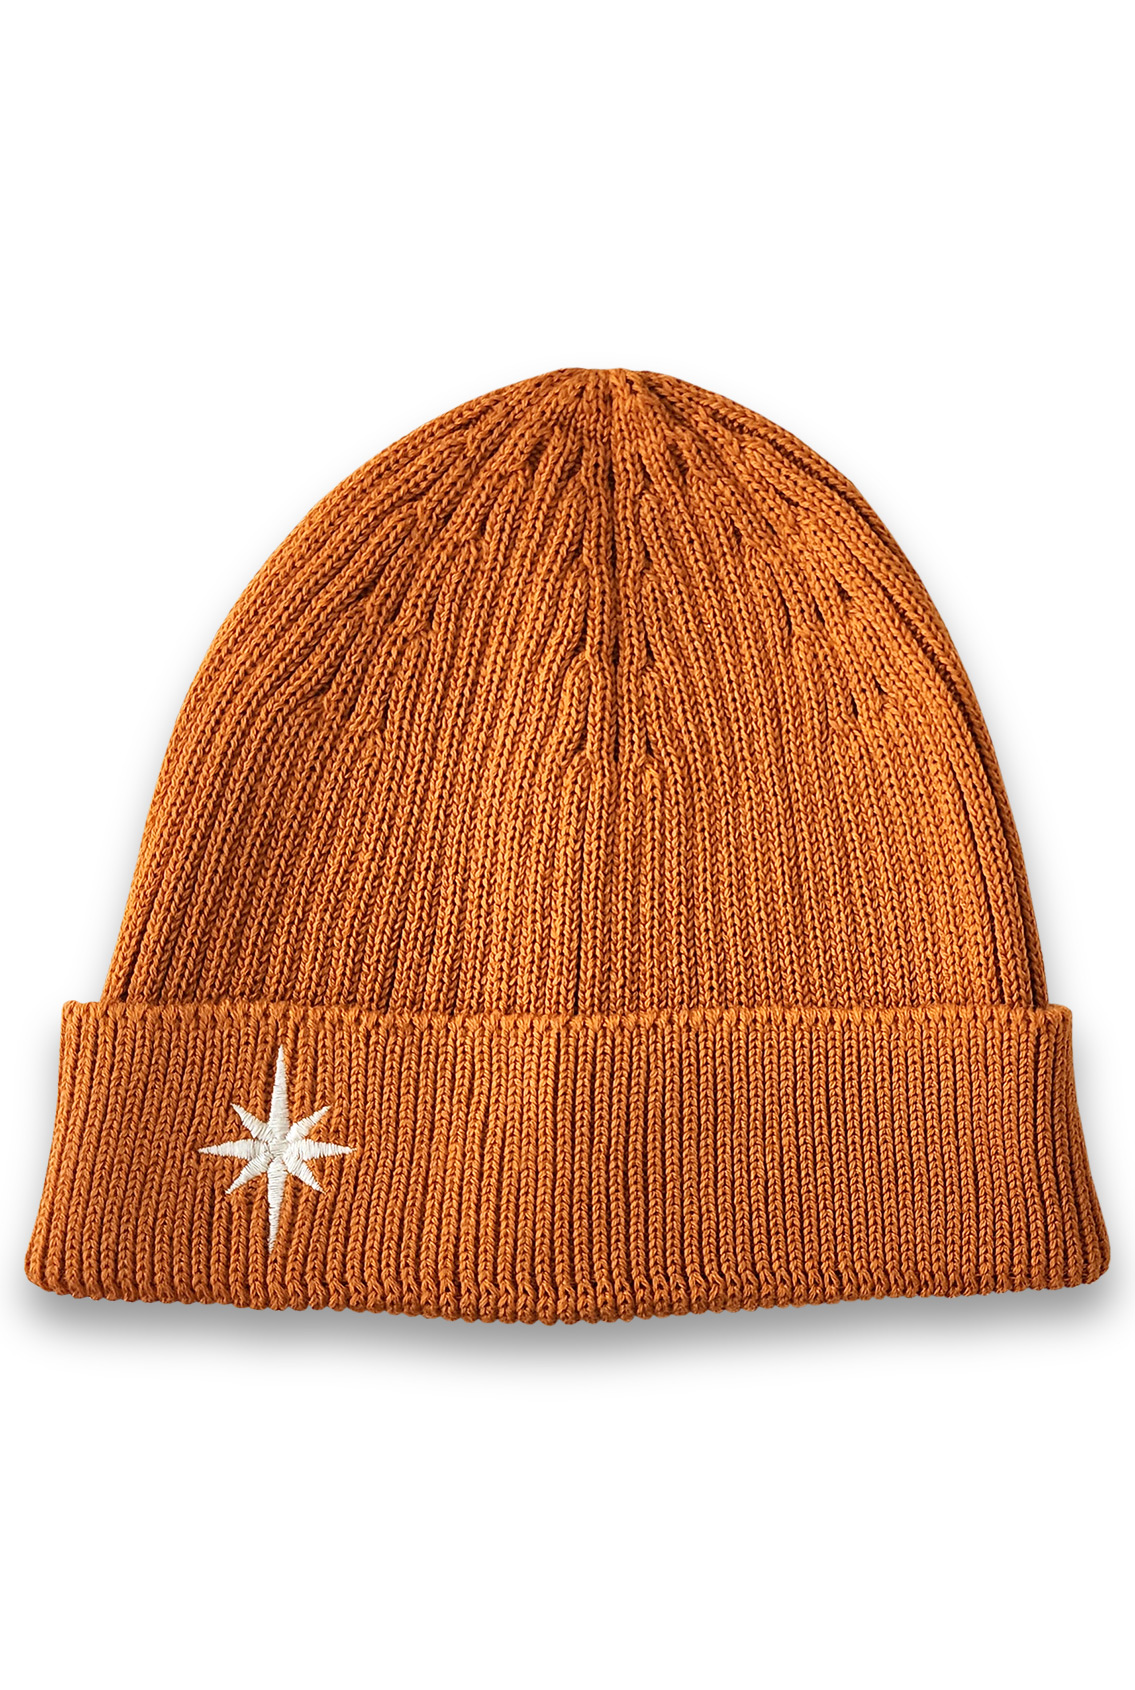 orange hat with christmas star